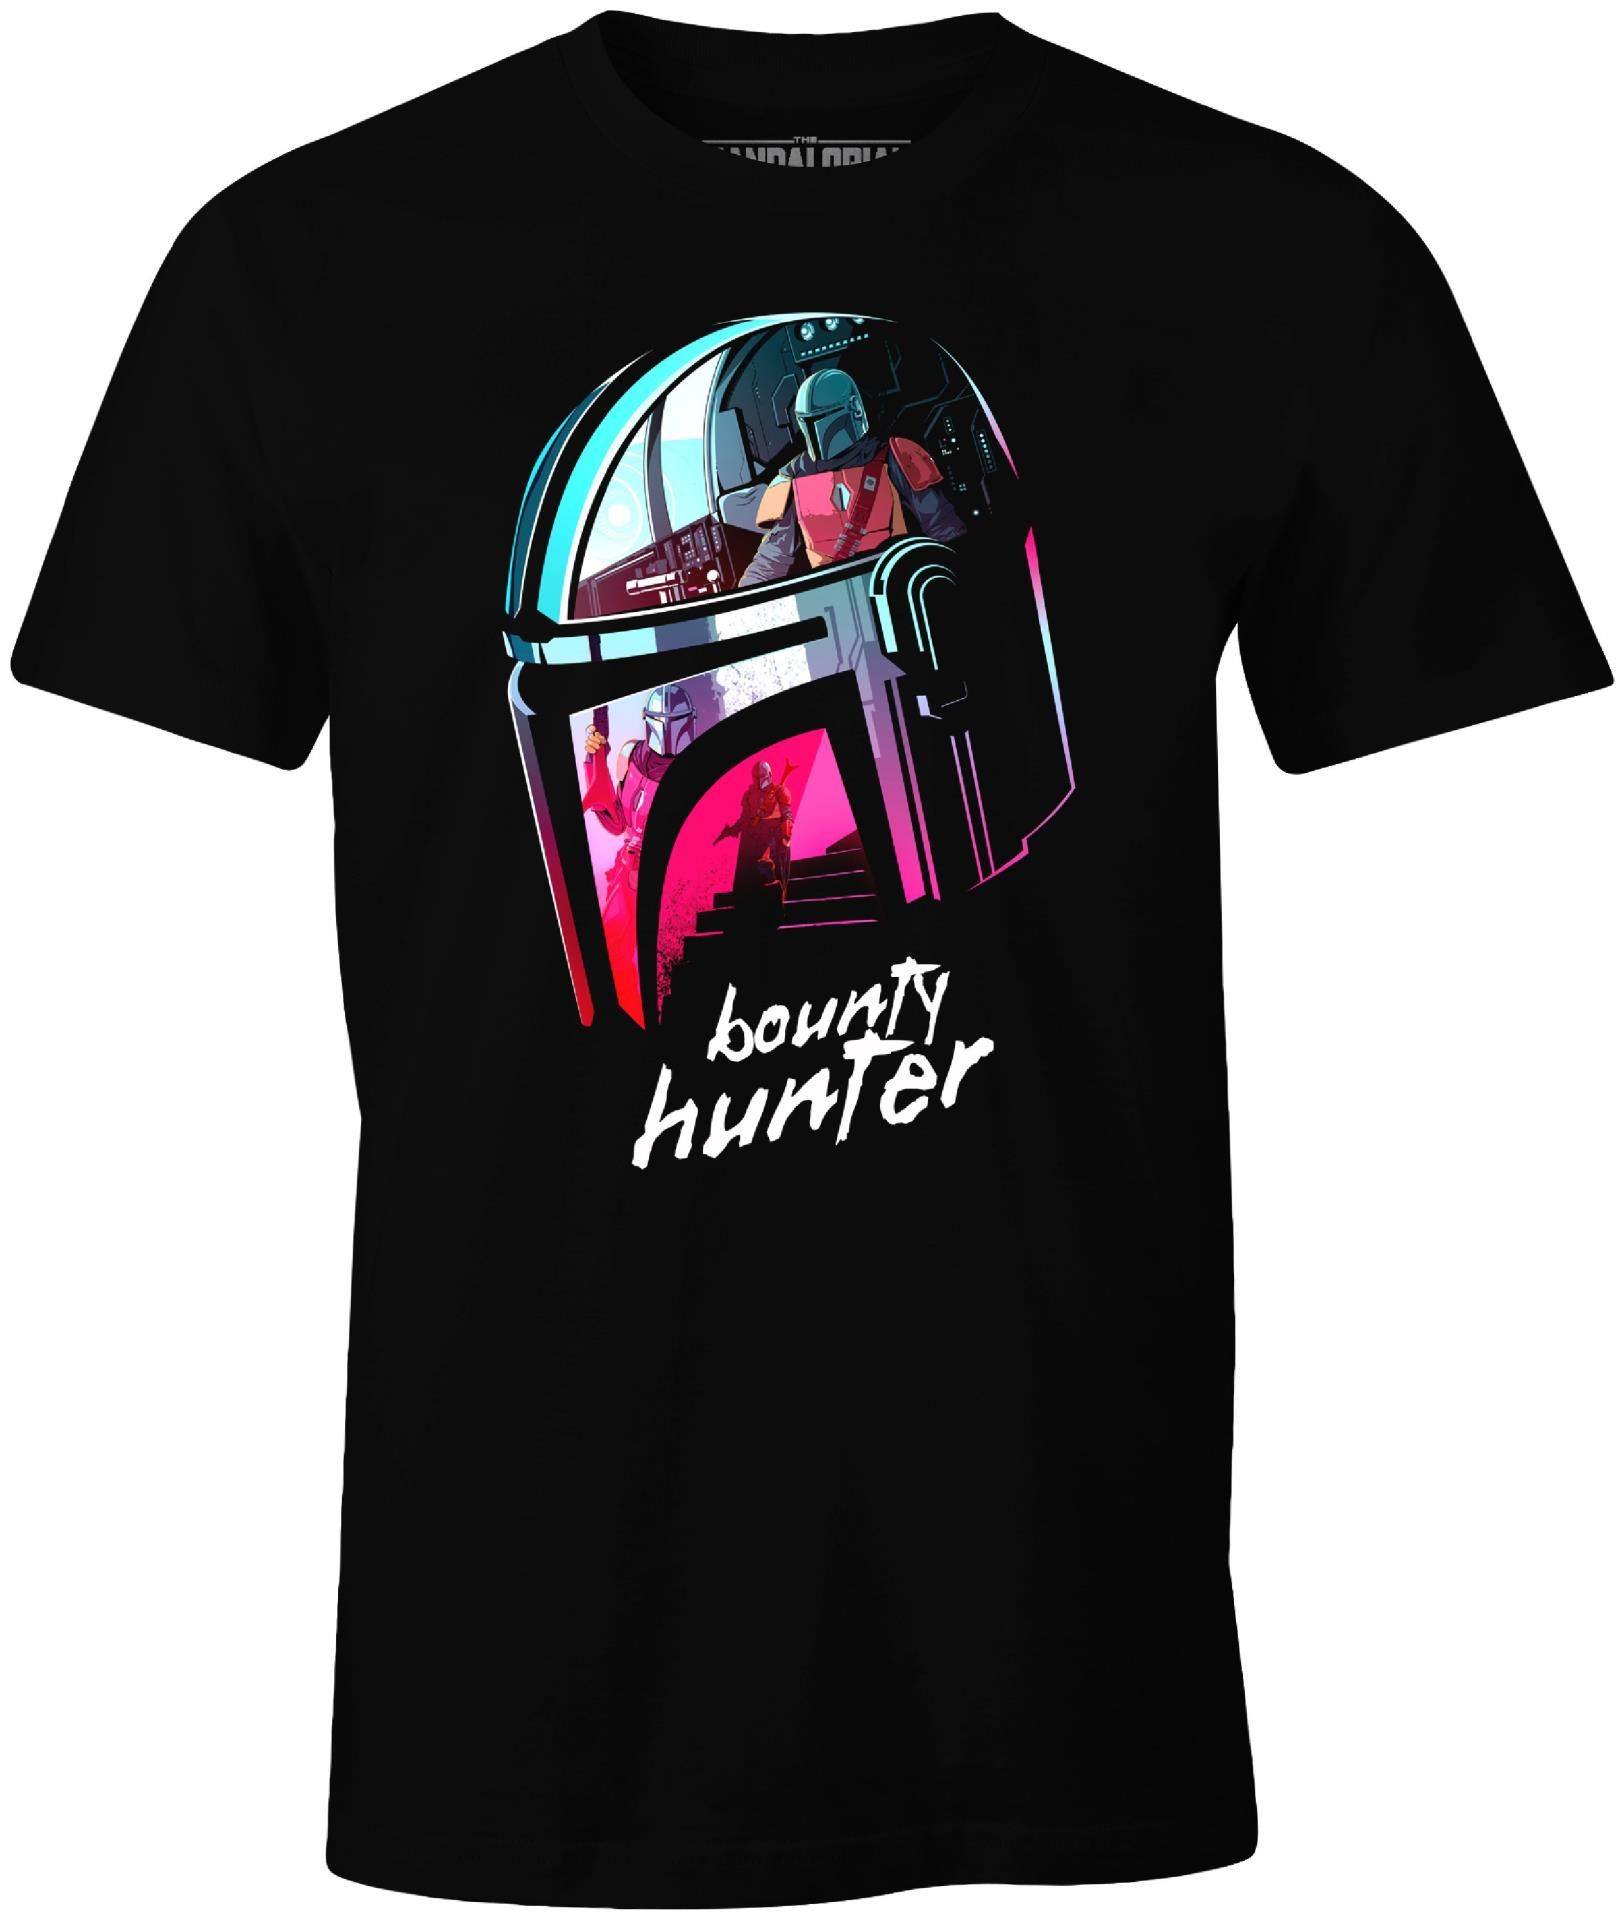 The Mandalorian - Bounty Hunter Black T-Shirt S